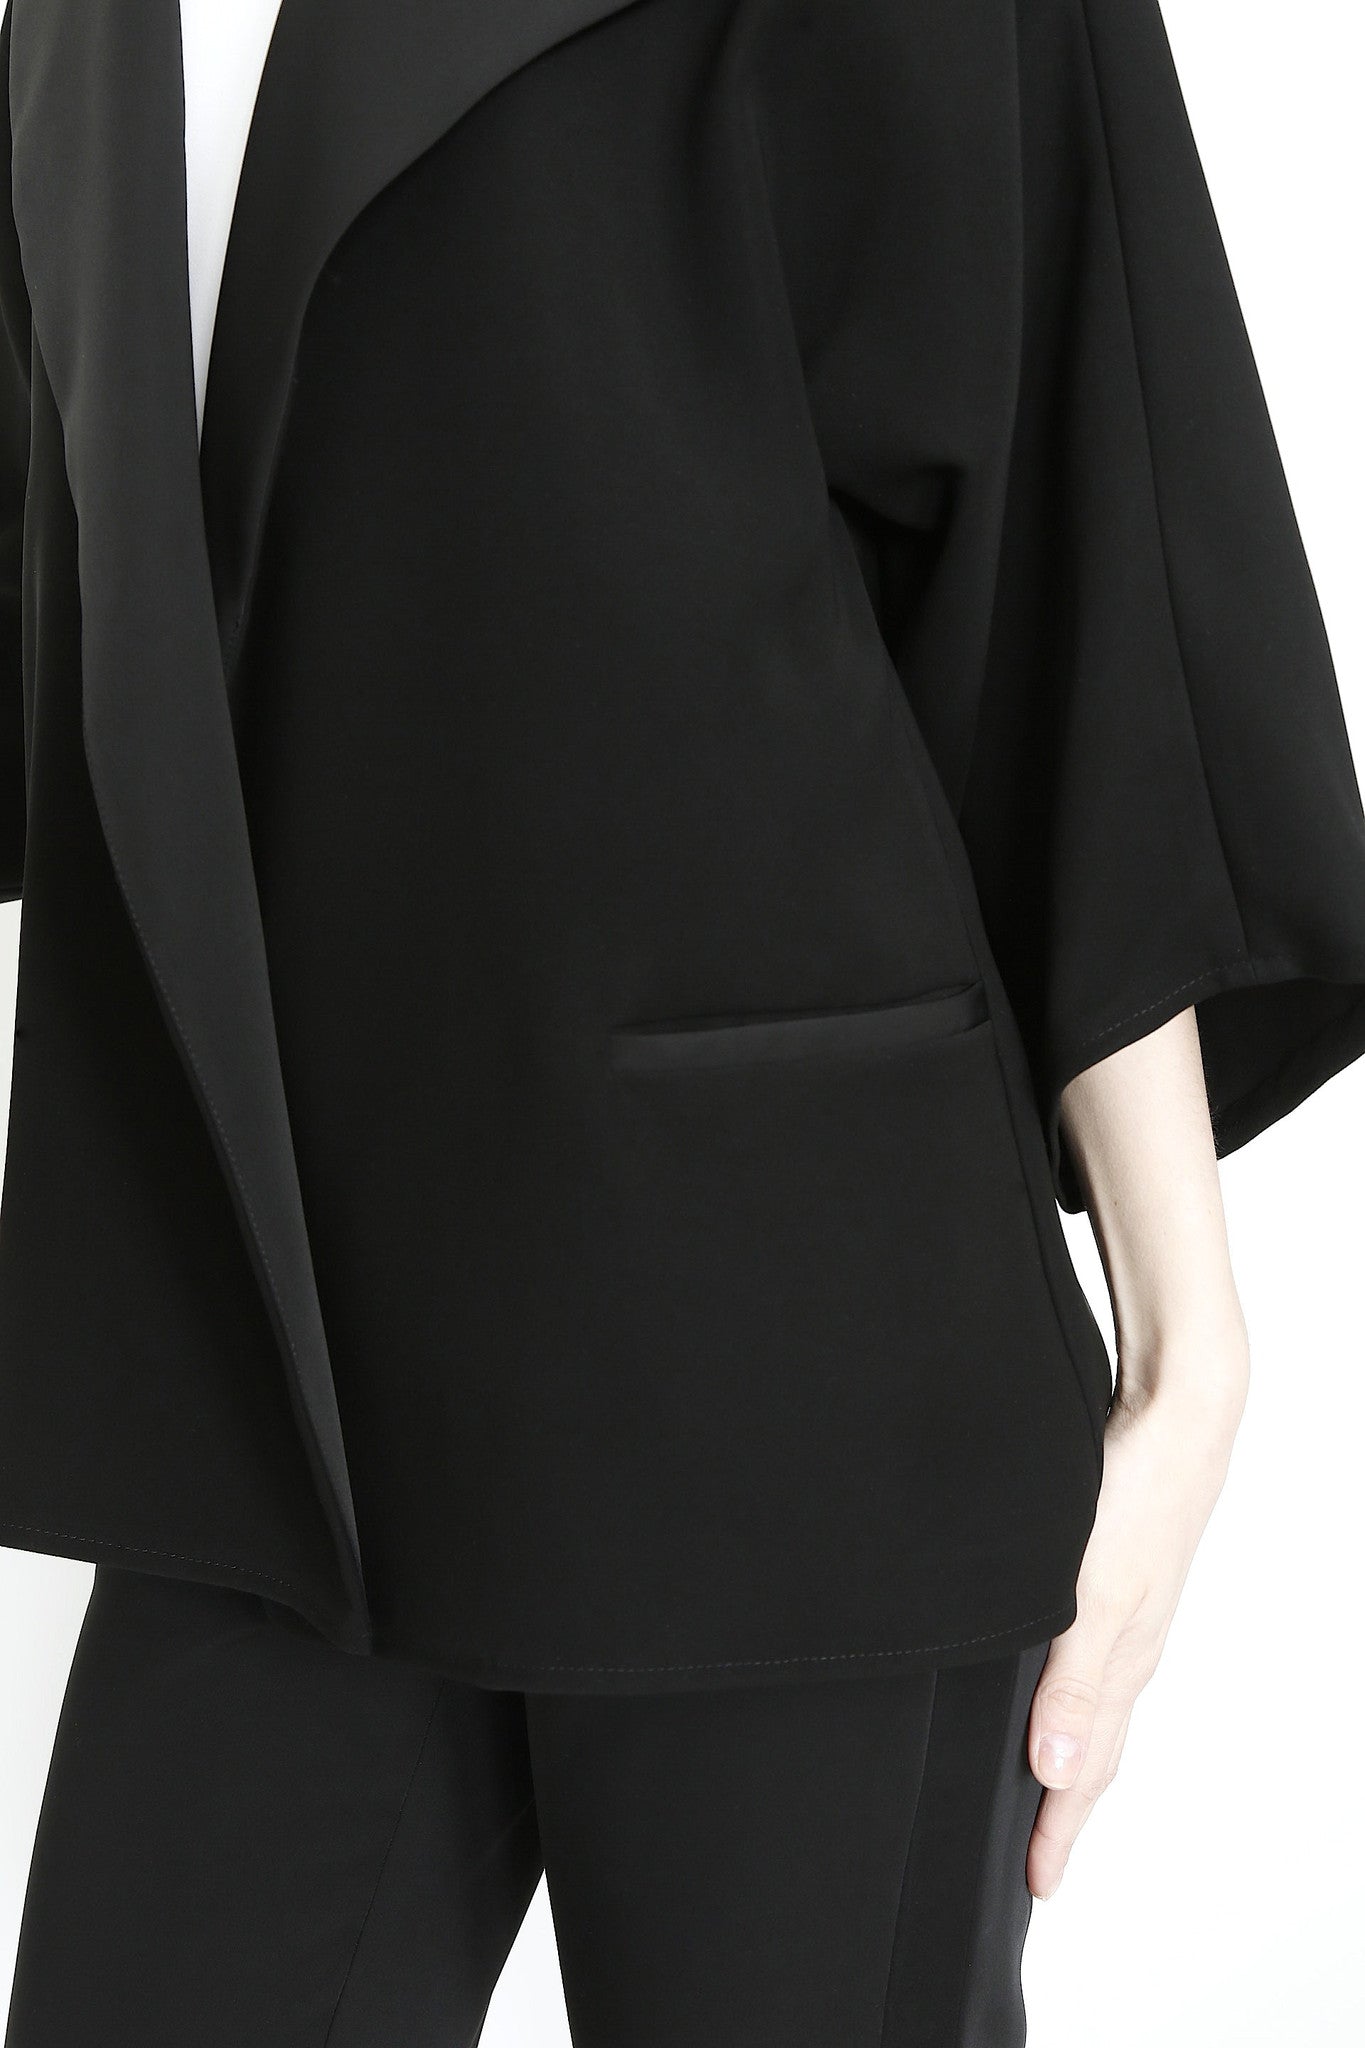 Lapel Kimono Sleeve Jacket in Smart Gab Microfiber-6